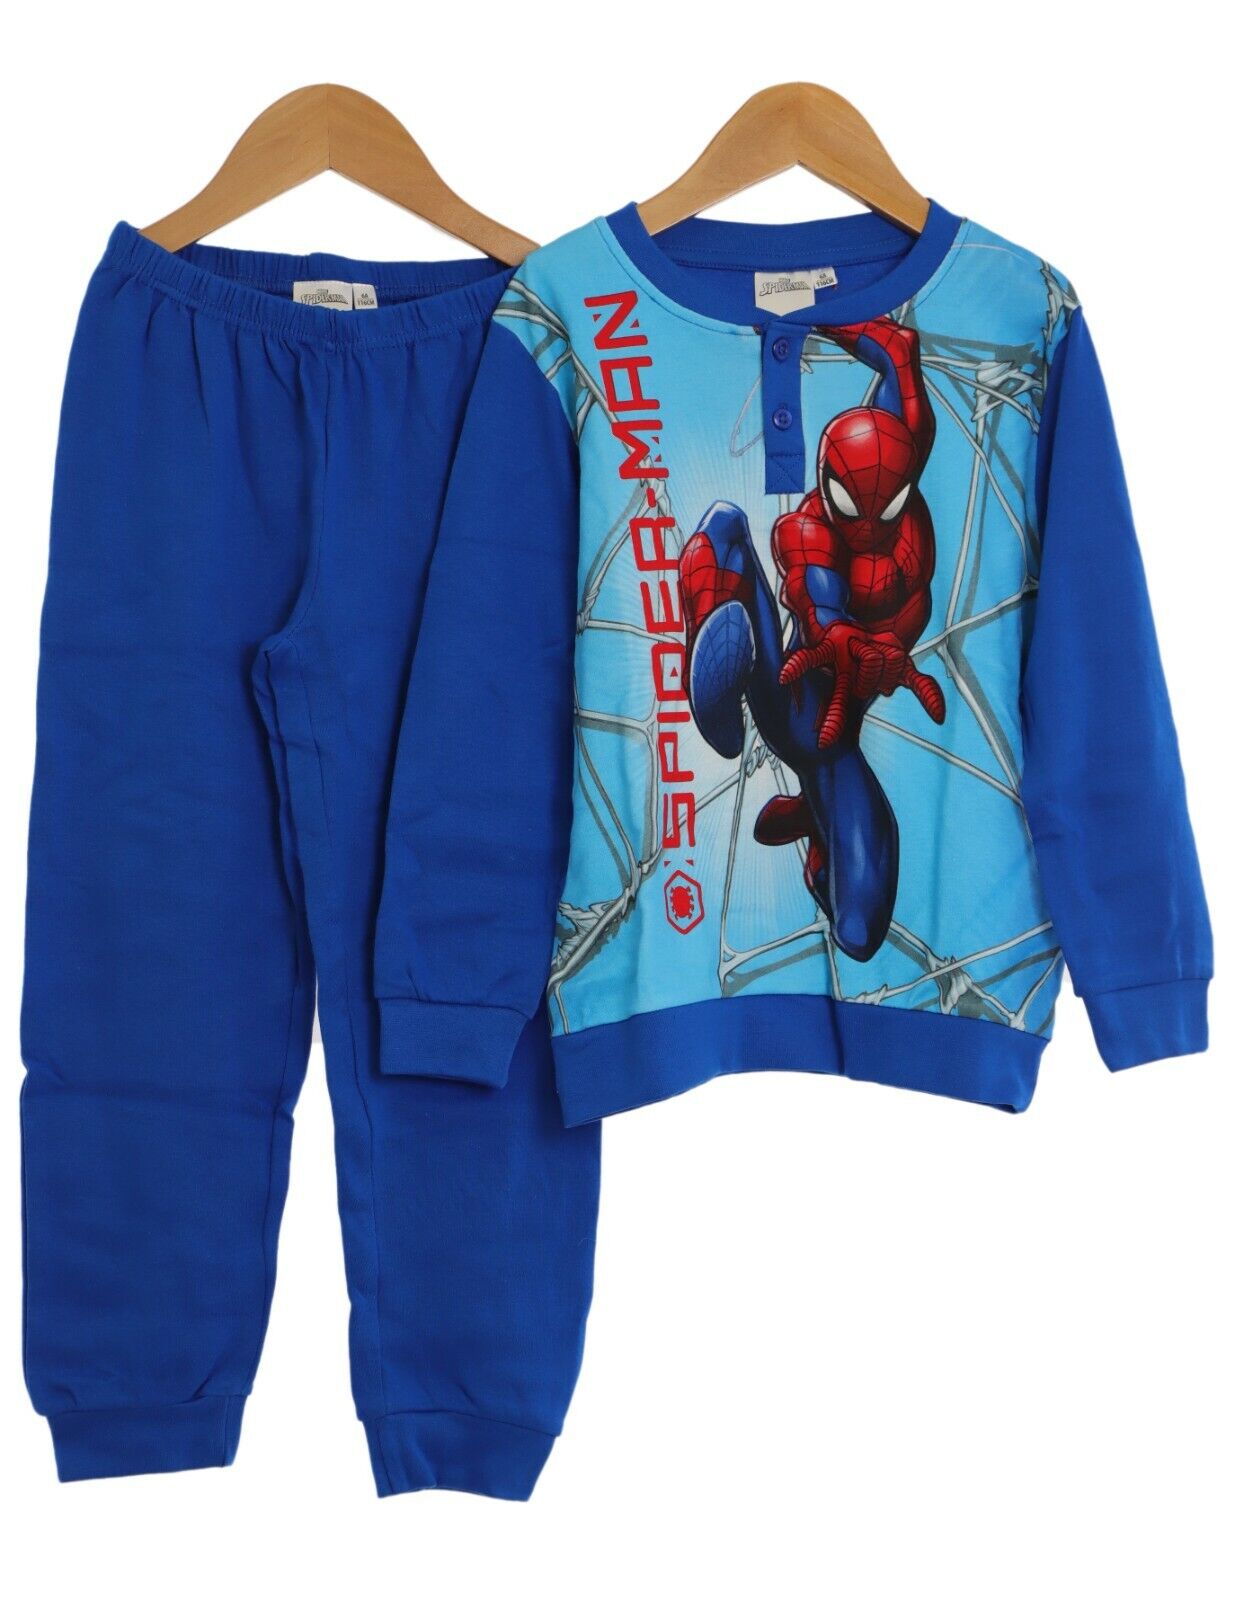 Pigiama Disney Bambino Caldo Cotone Interlock Spiderman Royal/Celeste 100% Cotone (3132)